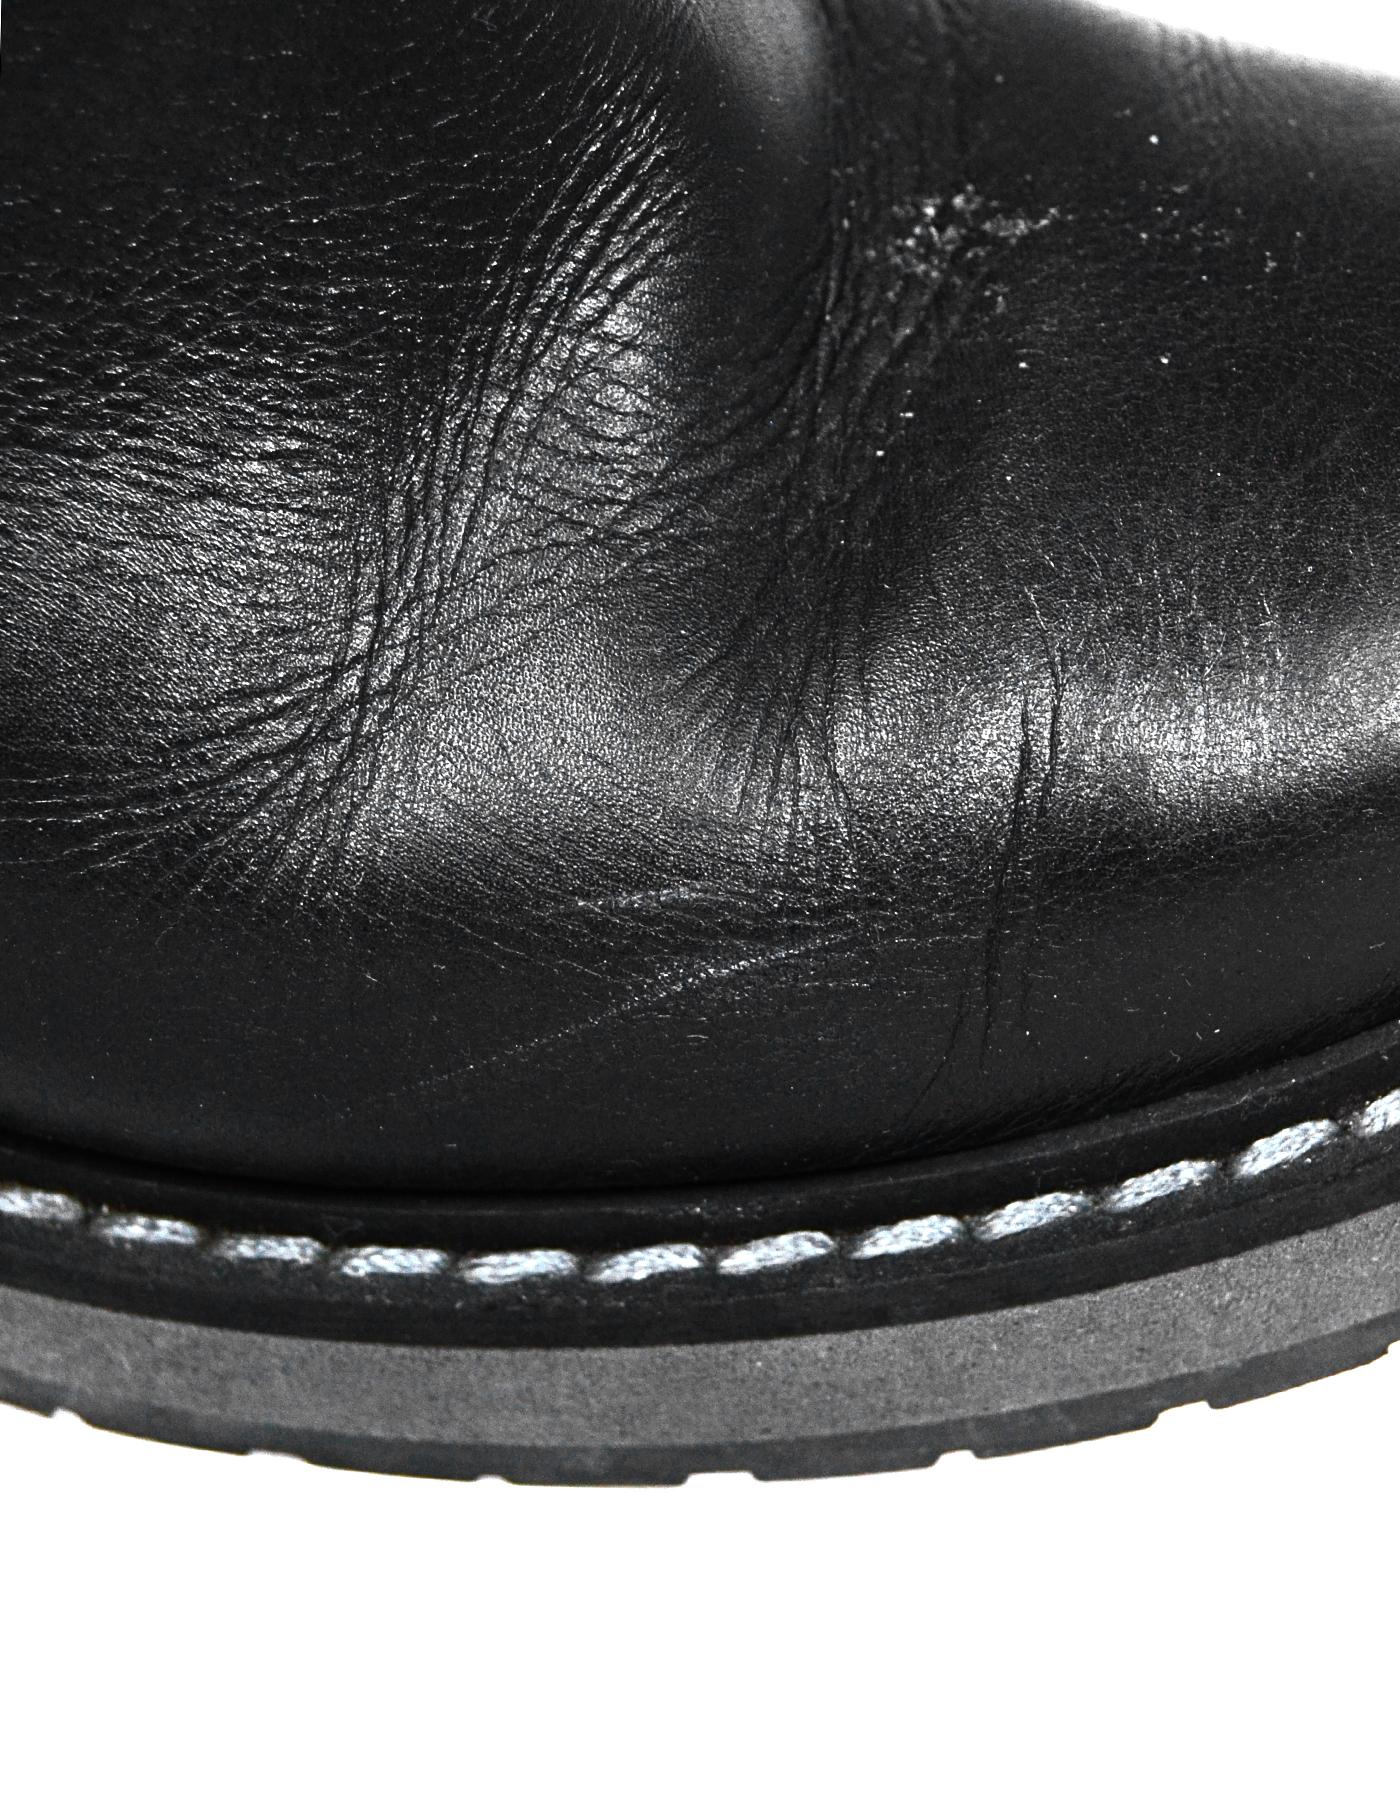 Fendi Black Leather Concealed Wedge Boot sz 38.5 5